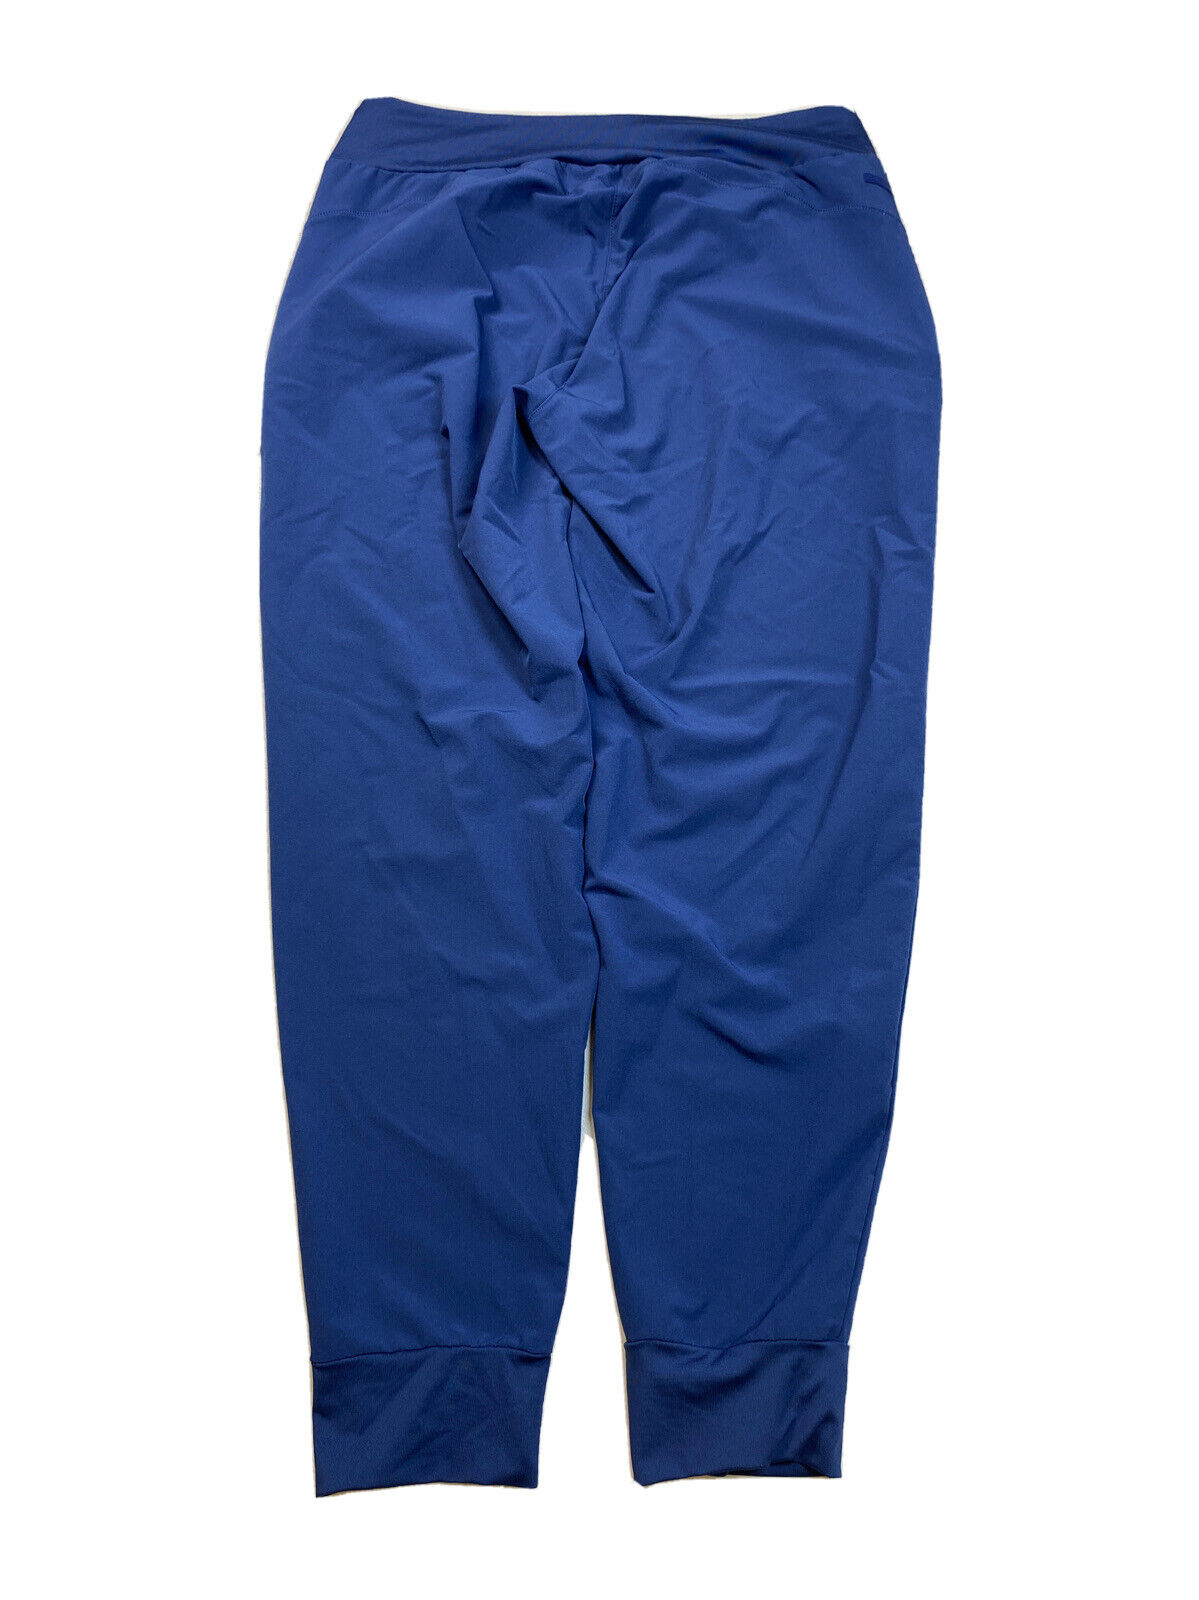 Adidas Women's Blue Stretch Waist Jogger Athletic Pants - M